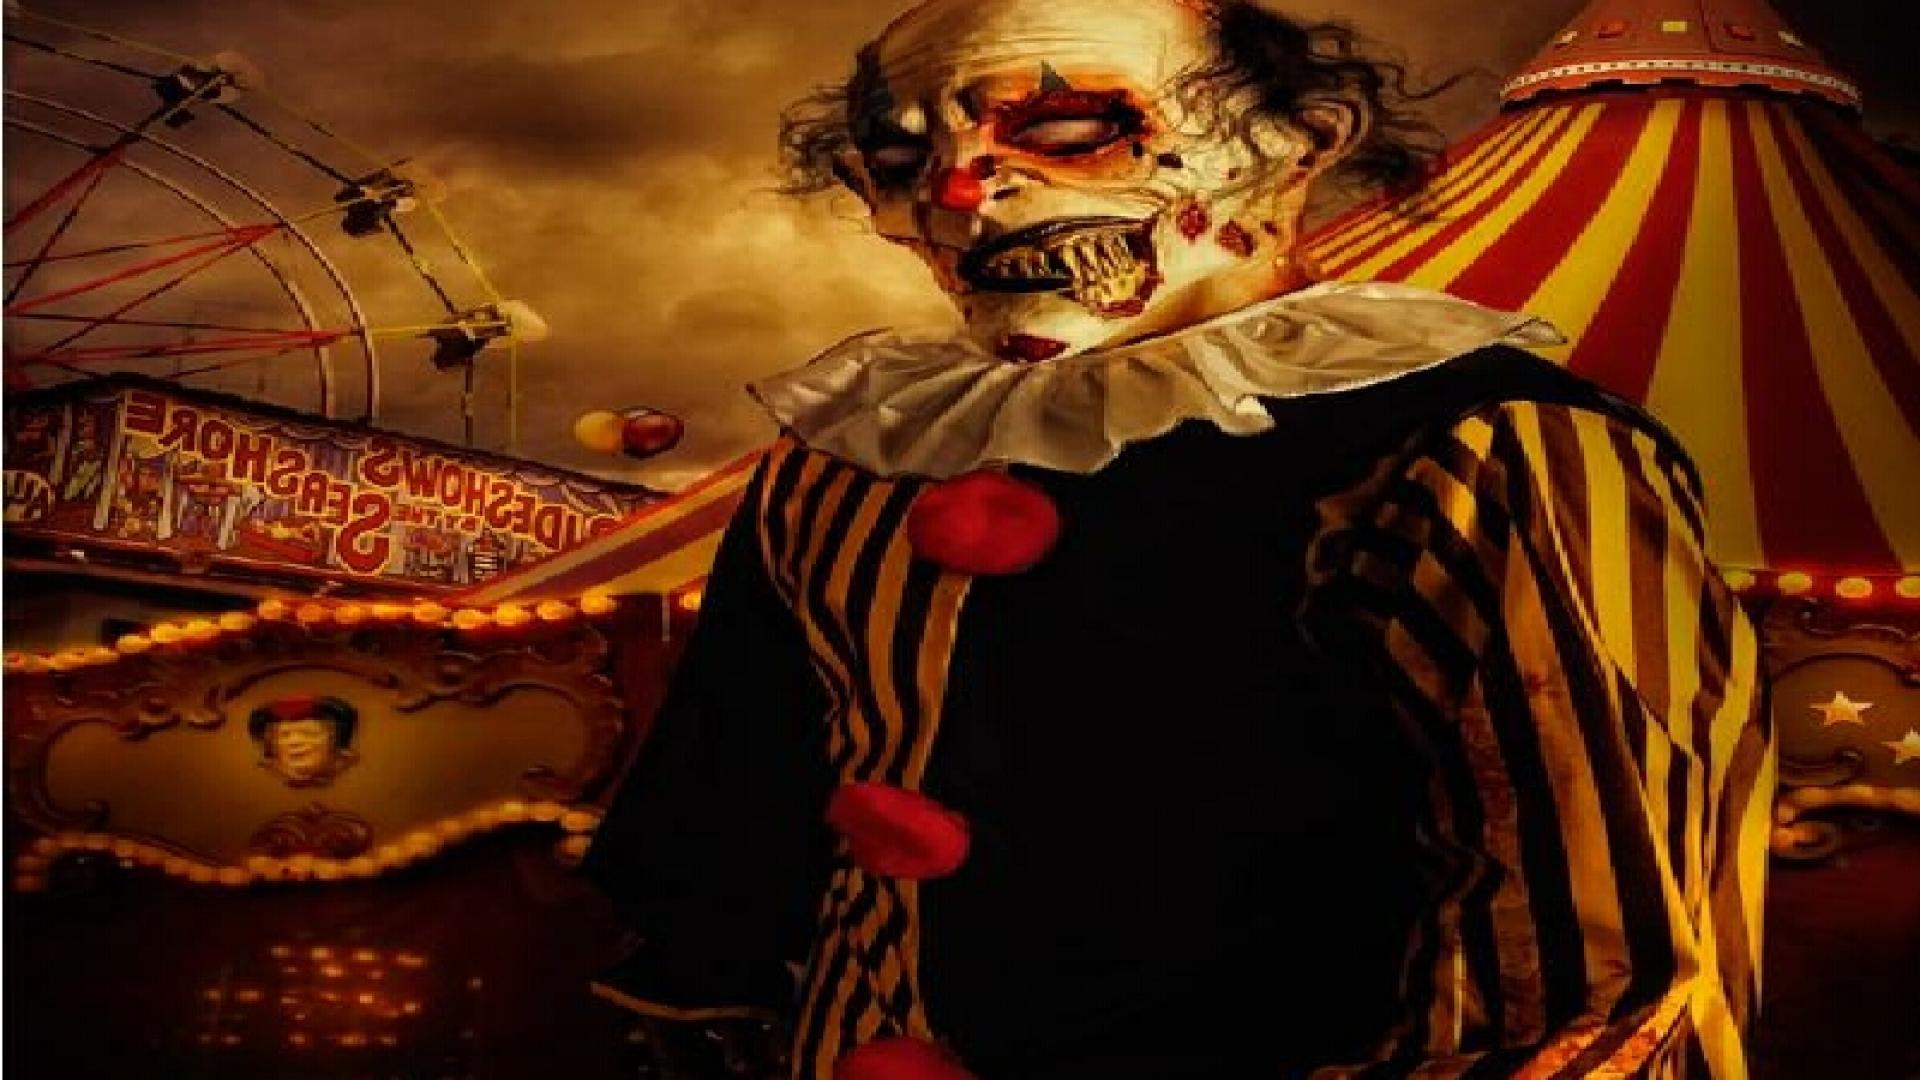 Creepy Clown Wallpaper. Clown Fetish. Creepy clown